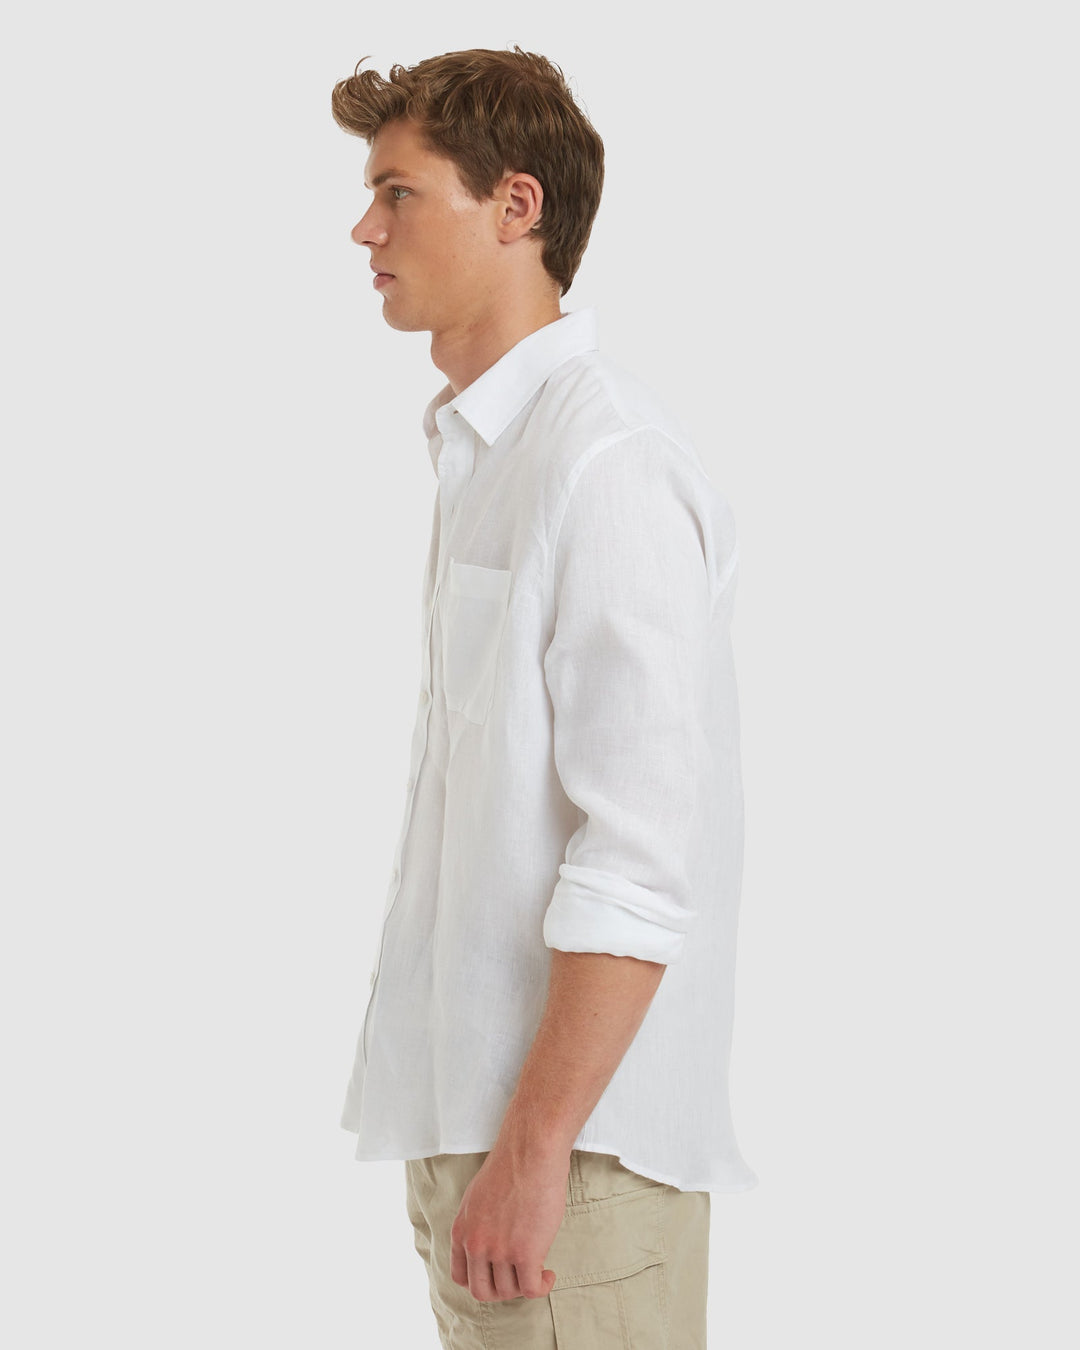 Tulum White Linen Shirt Long sleeve - Casual Fit